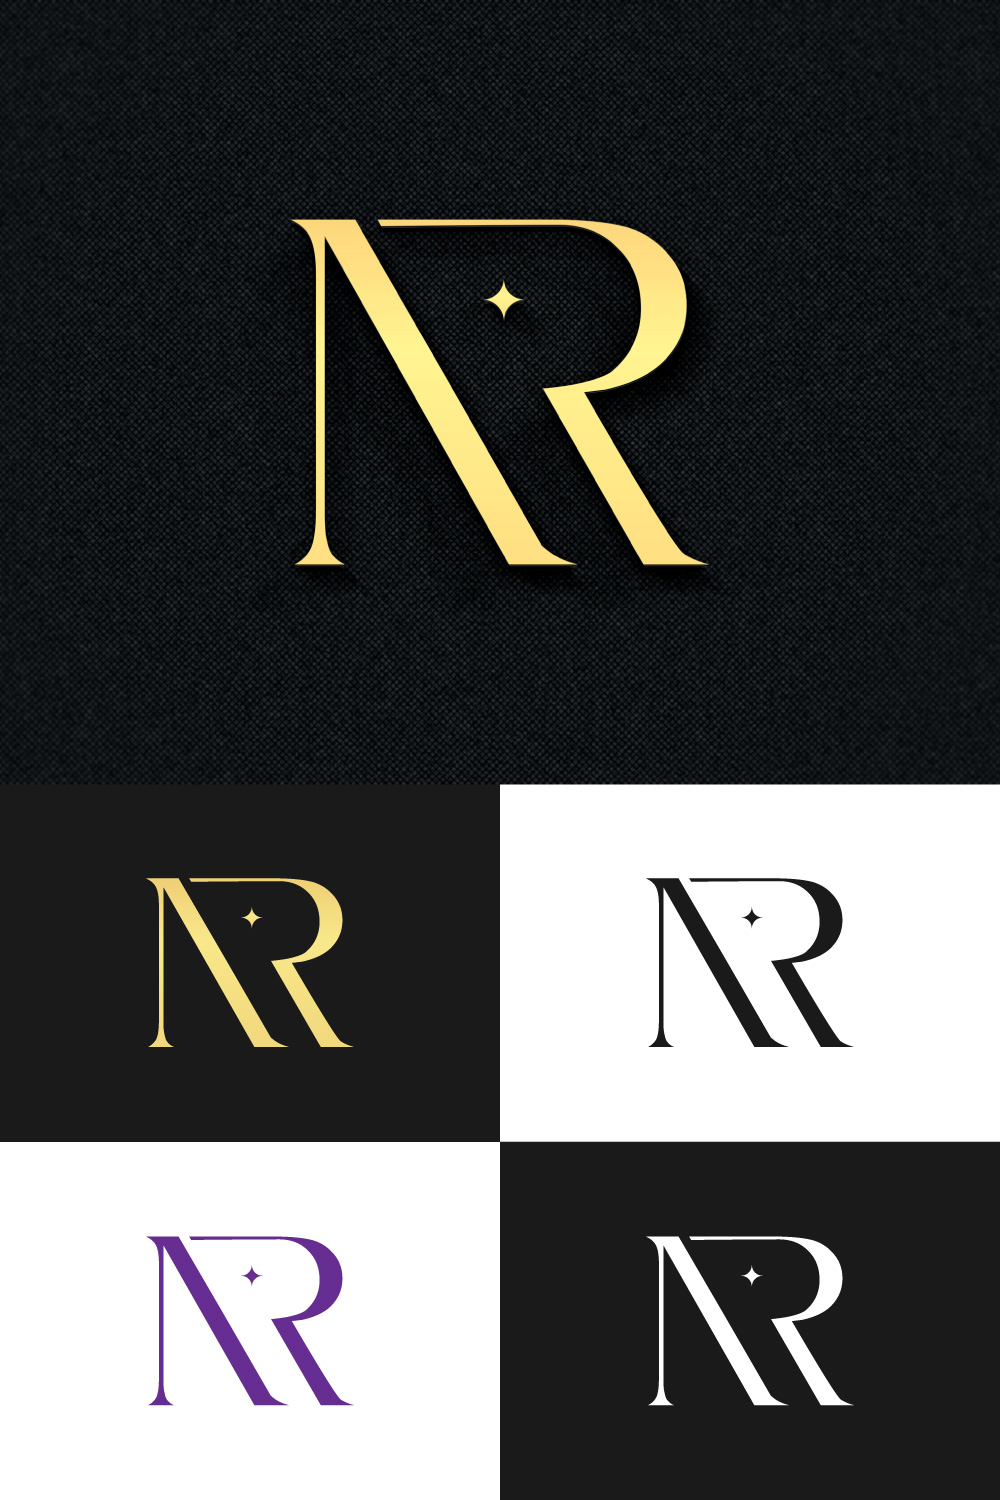 NR luxury logo design pinterest preview image.